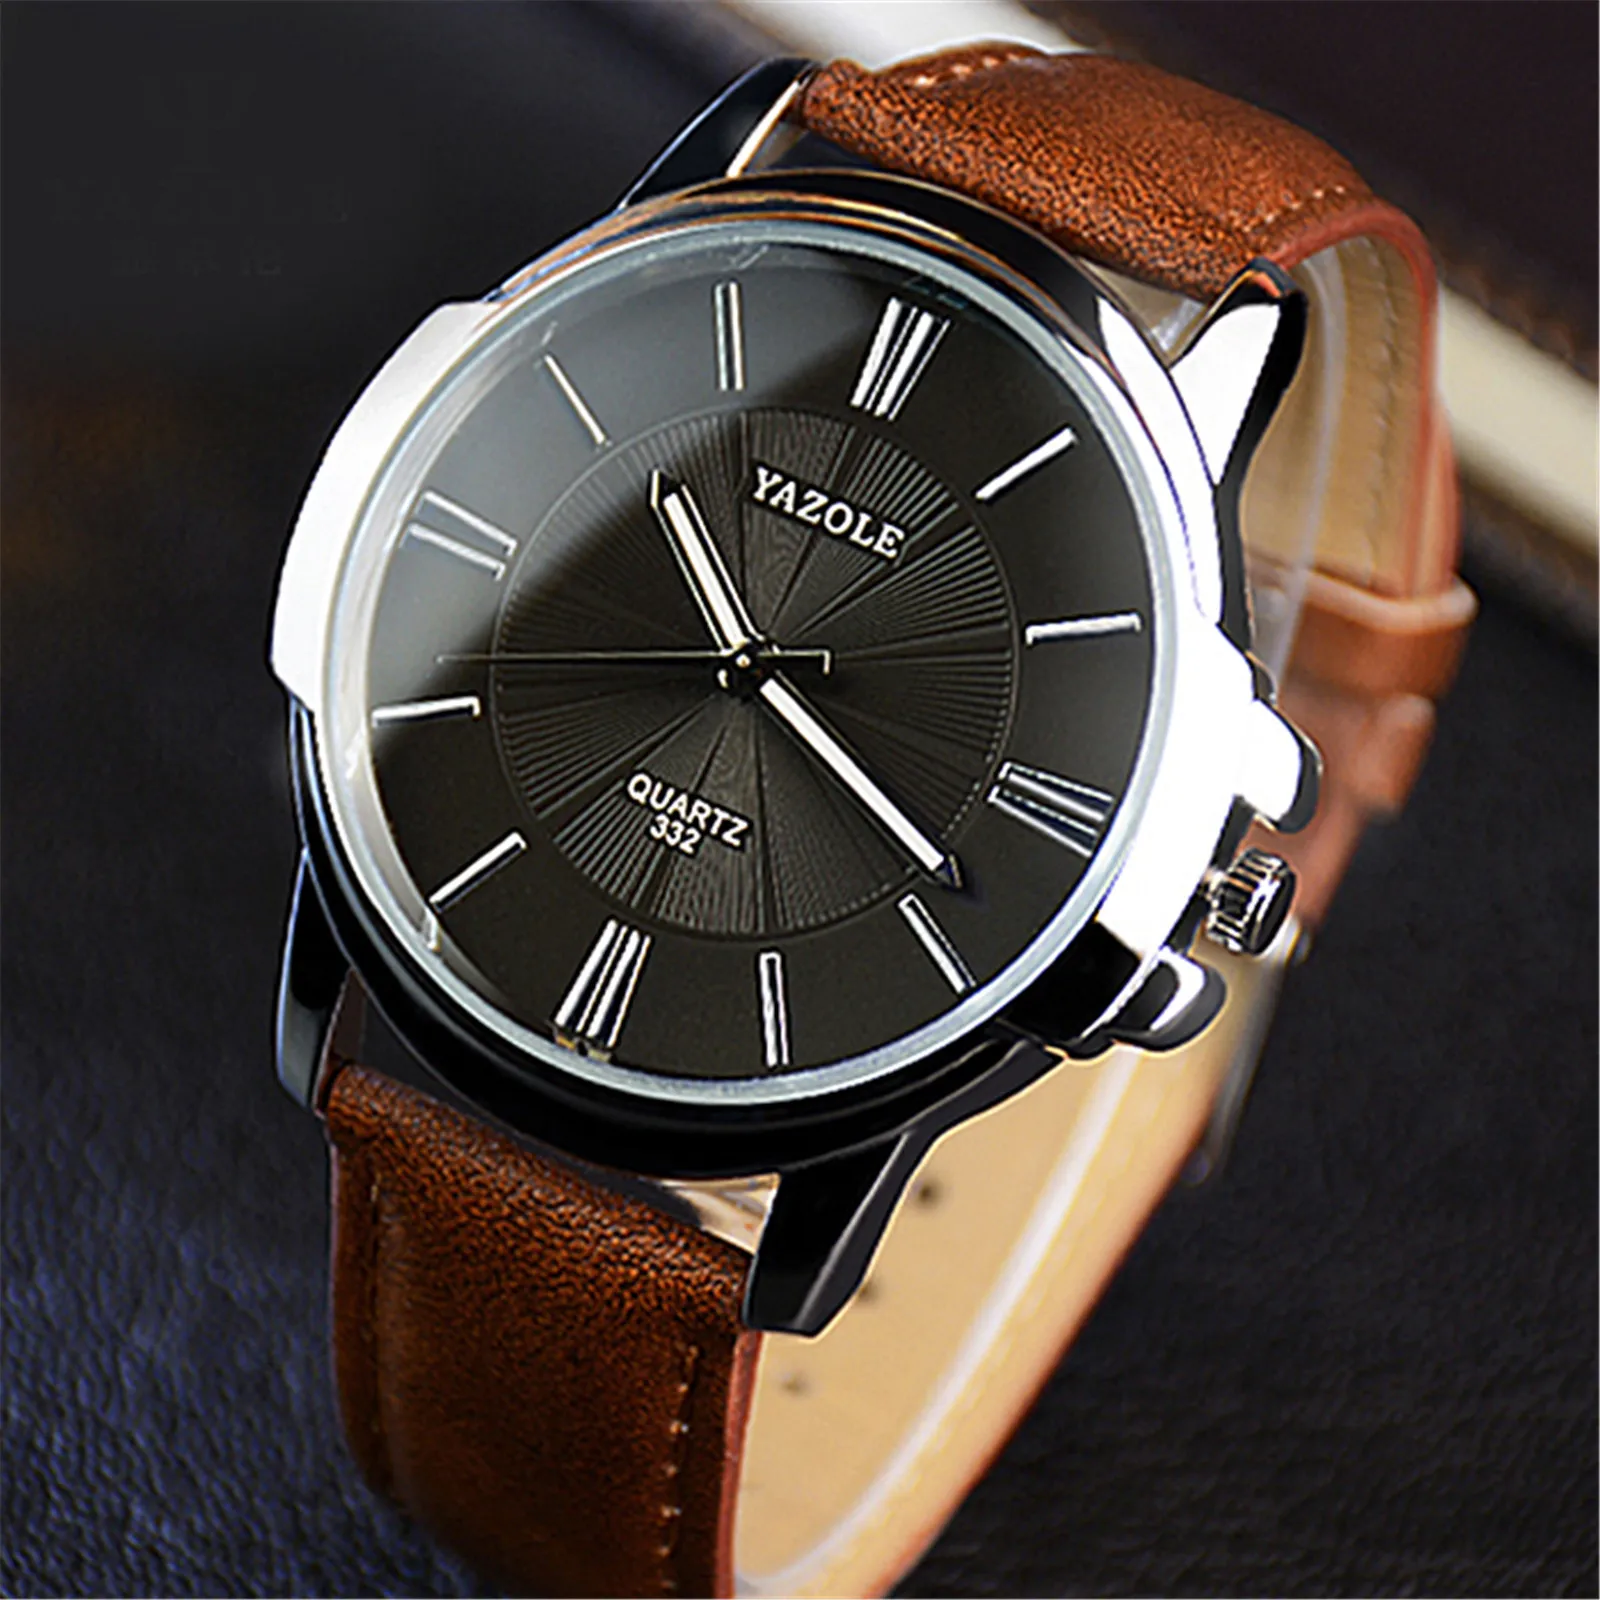 

Fashion Casual Men's Watch Roman Numerals Quartz Analog Wrist Watch Black Band Black Dial Faux Leather Band Wrist Watch